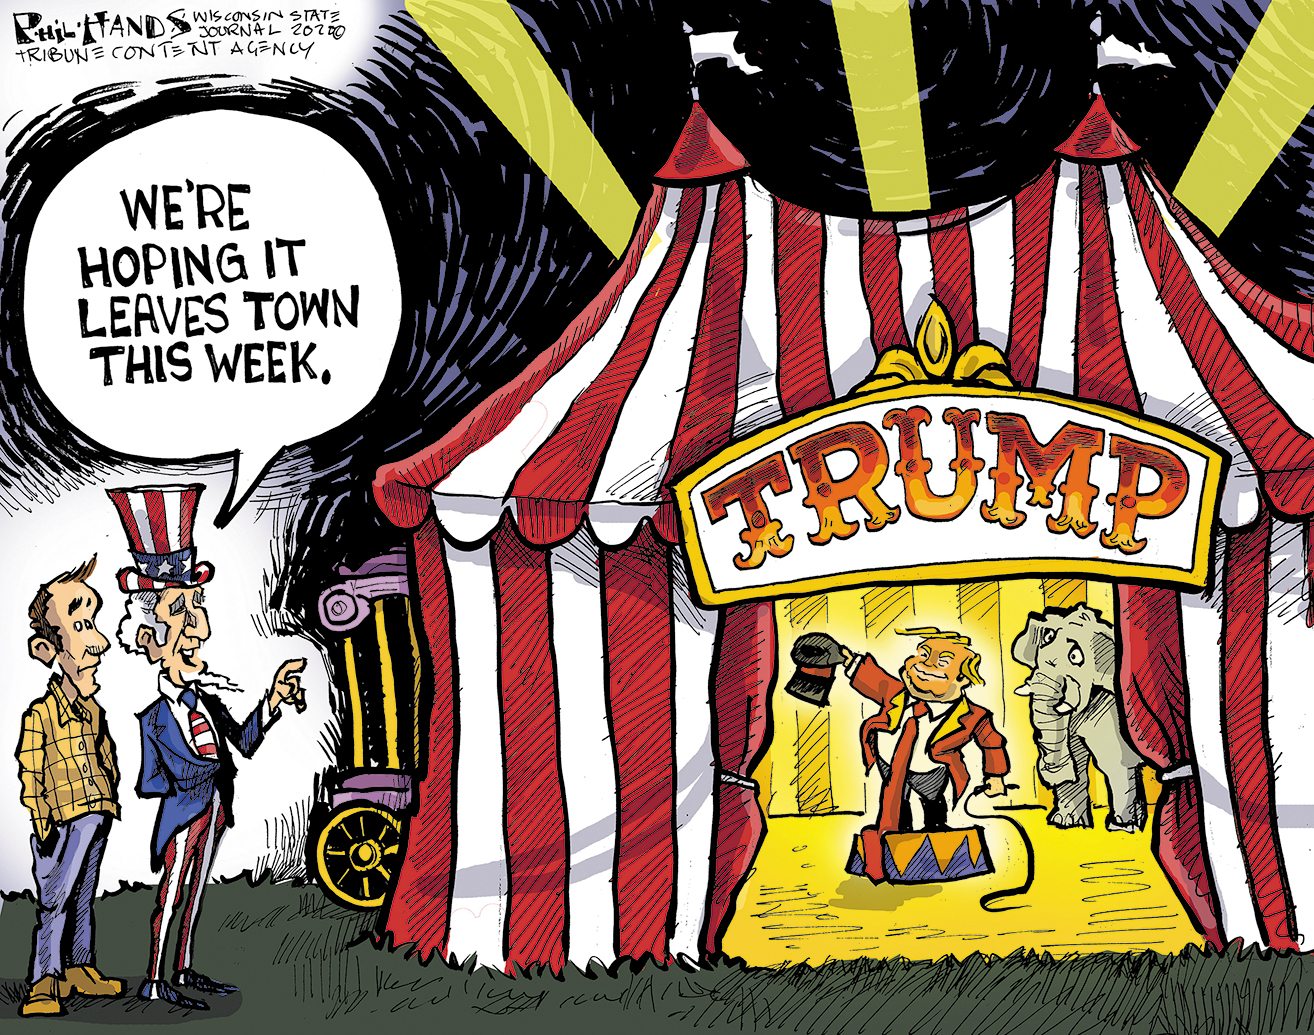 Political Cartoon . Trump 2020 circus